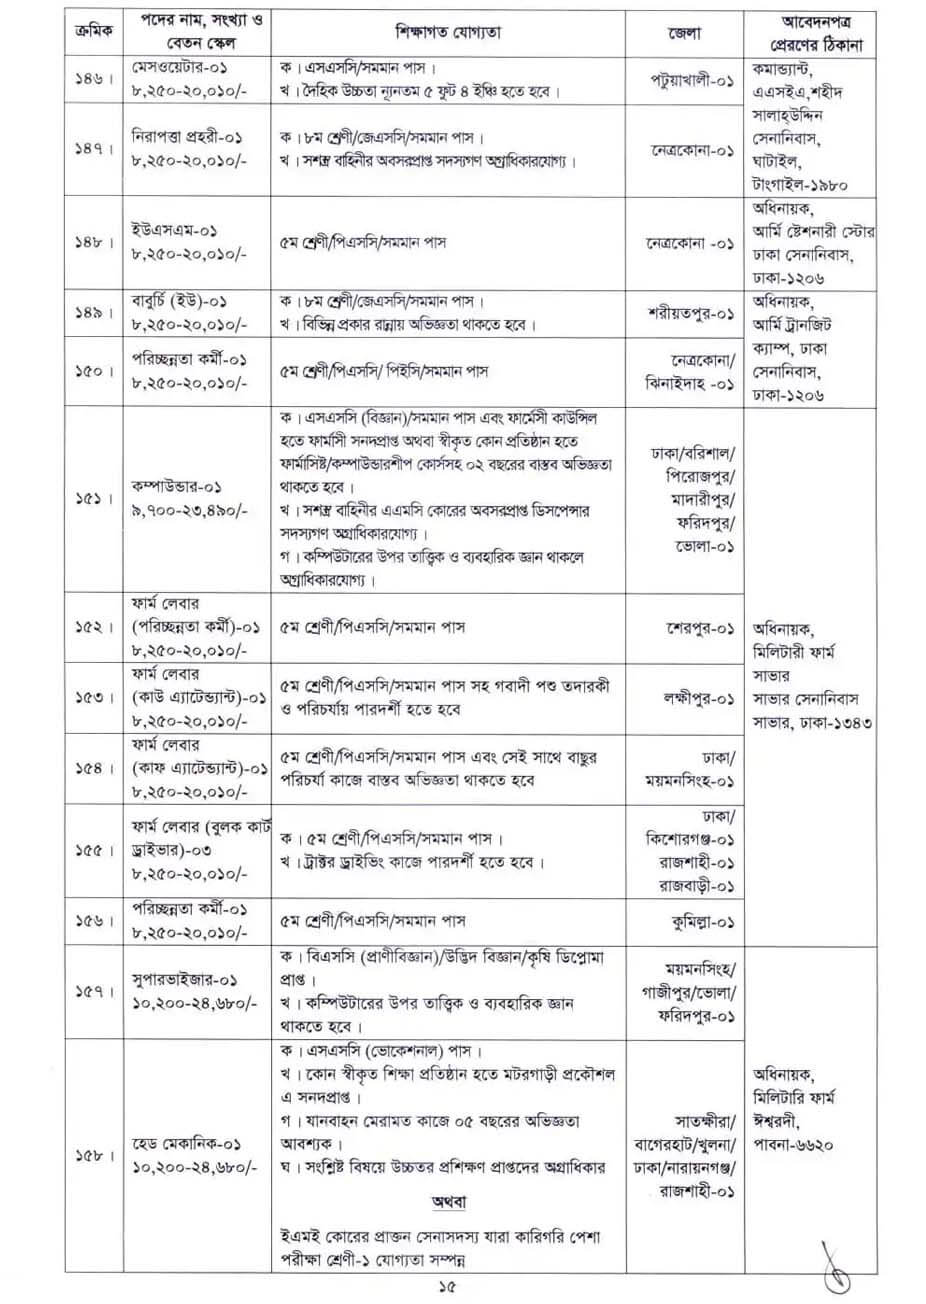 Bangladesh Army Civilian Job Circular 2022 1 16 | BD Govt Job Circular 2022 | সরকারি চাকরির খবর ২০২২